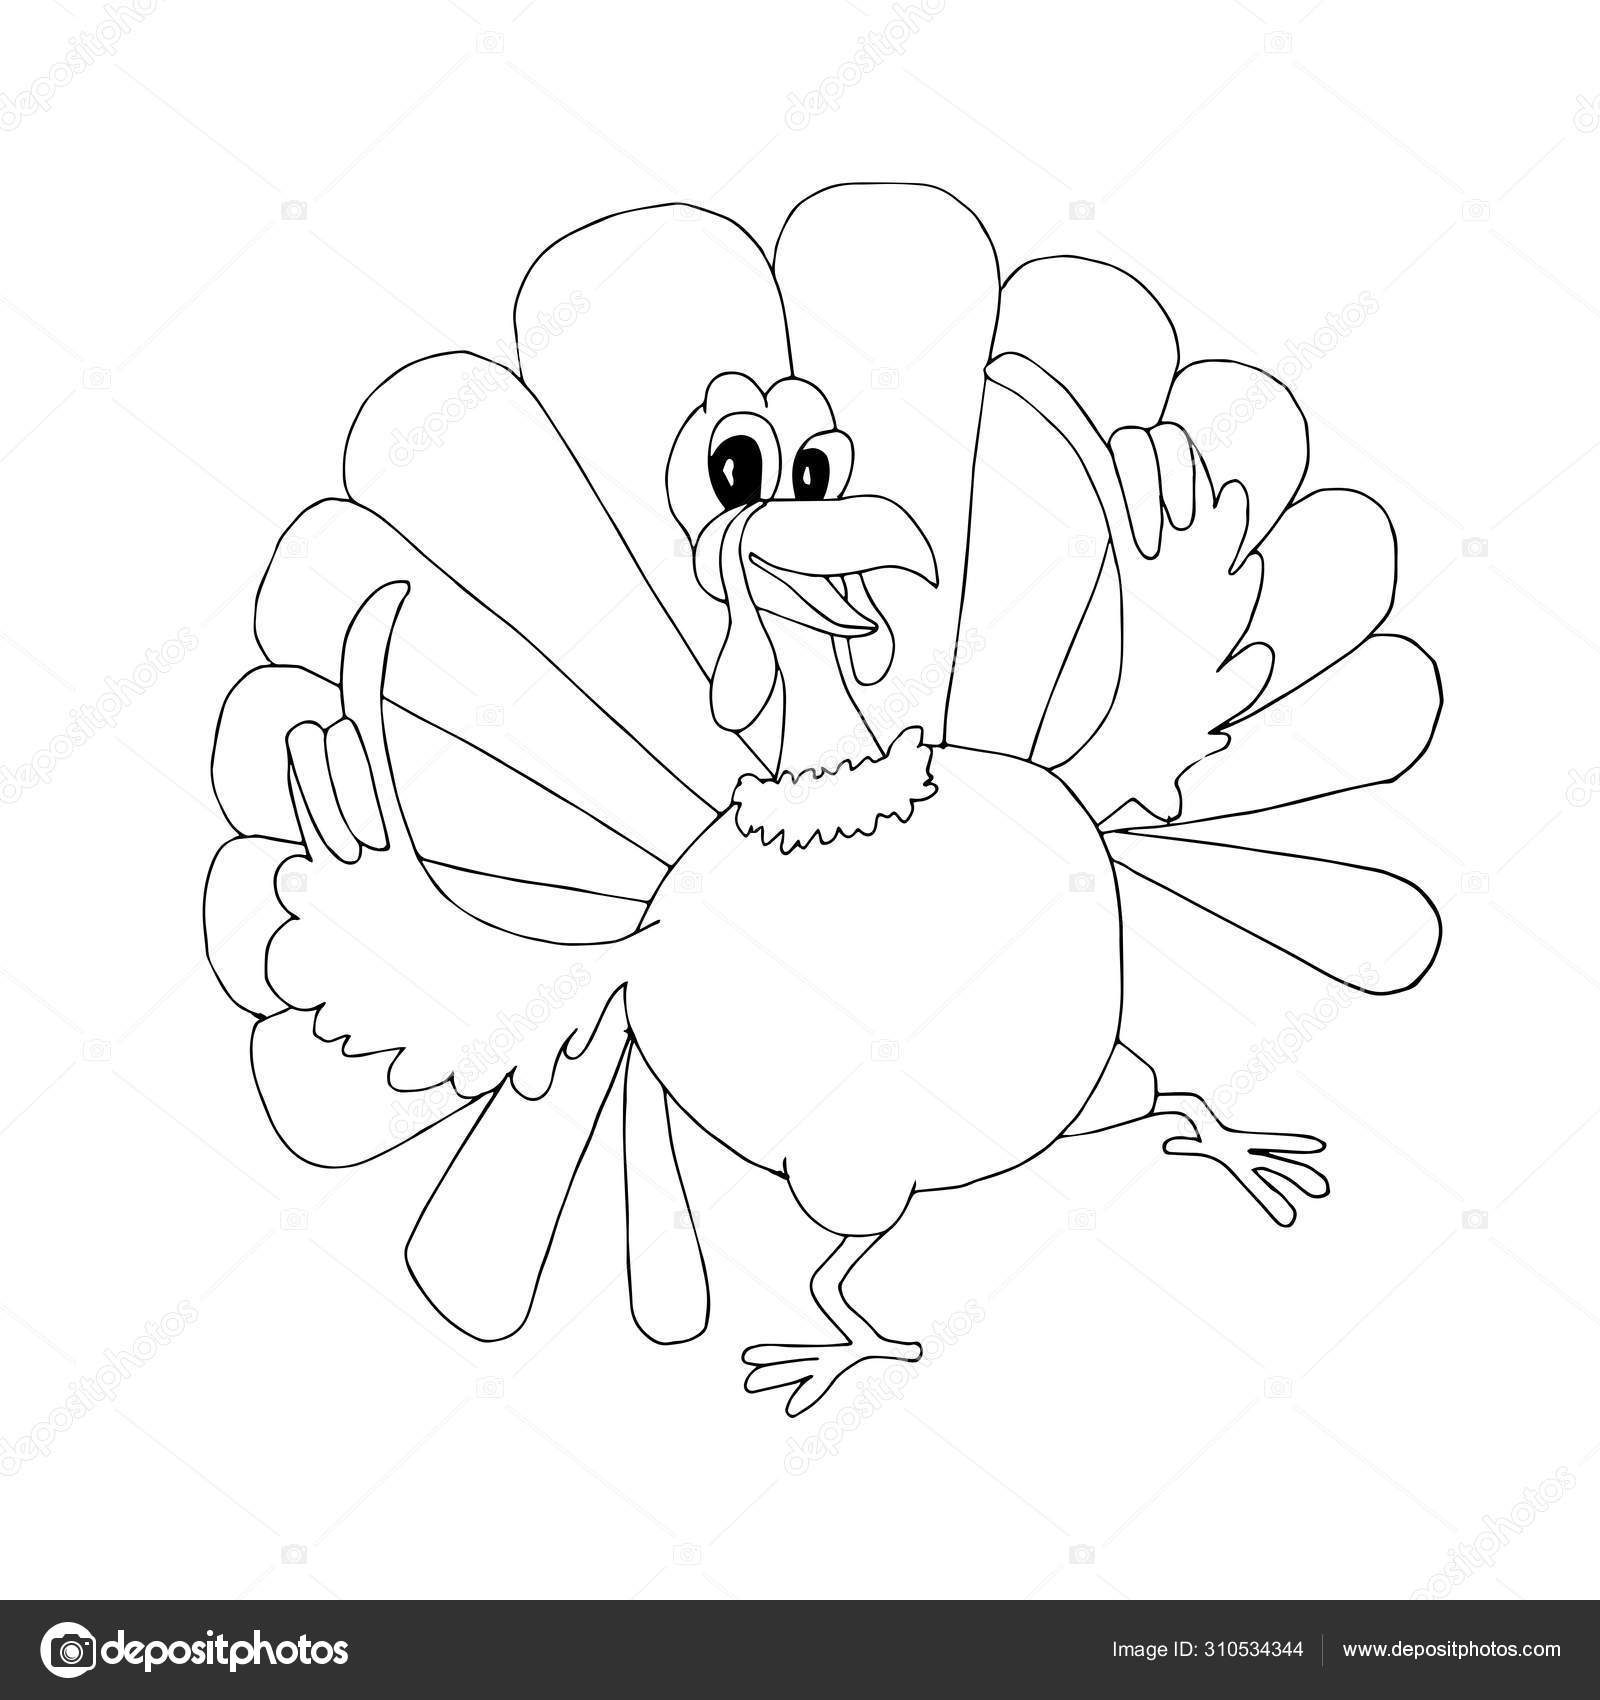 Turkey dancing sketch funny cute cartoons bird hand drawn art stock vector by katimusukrnet